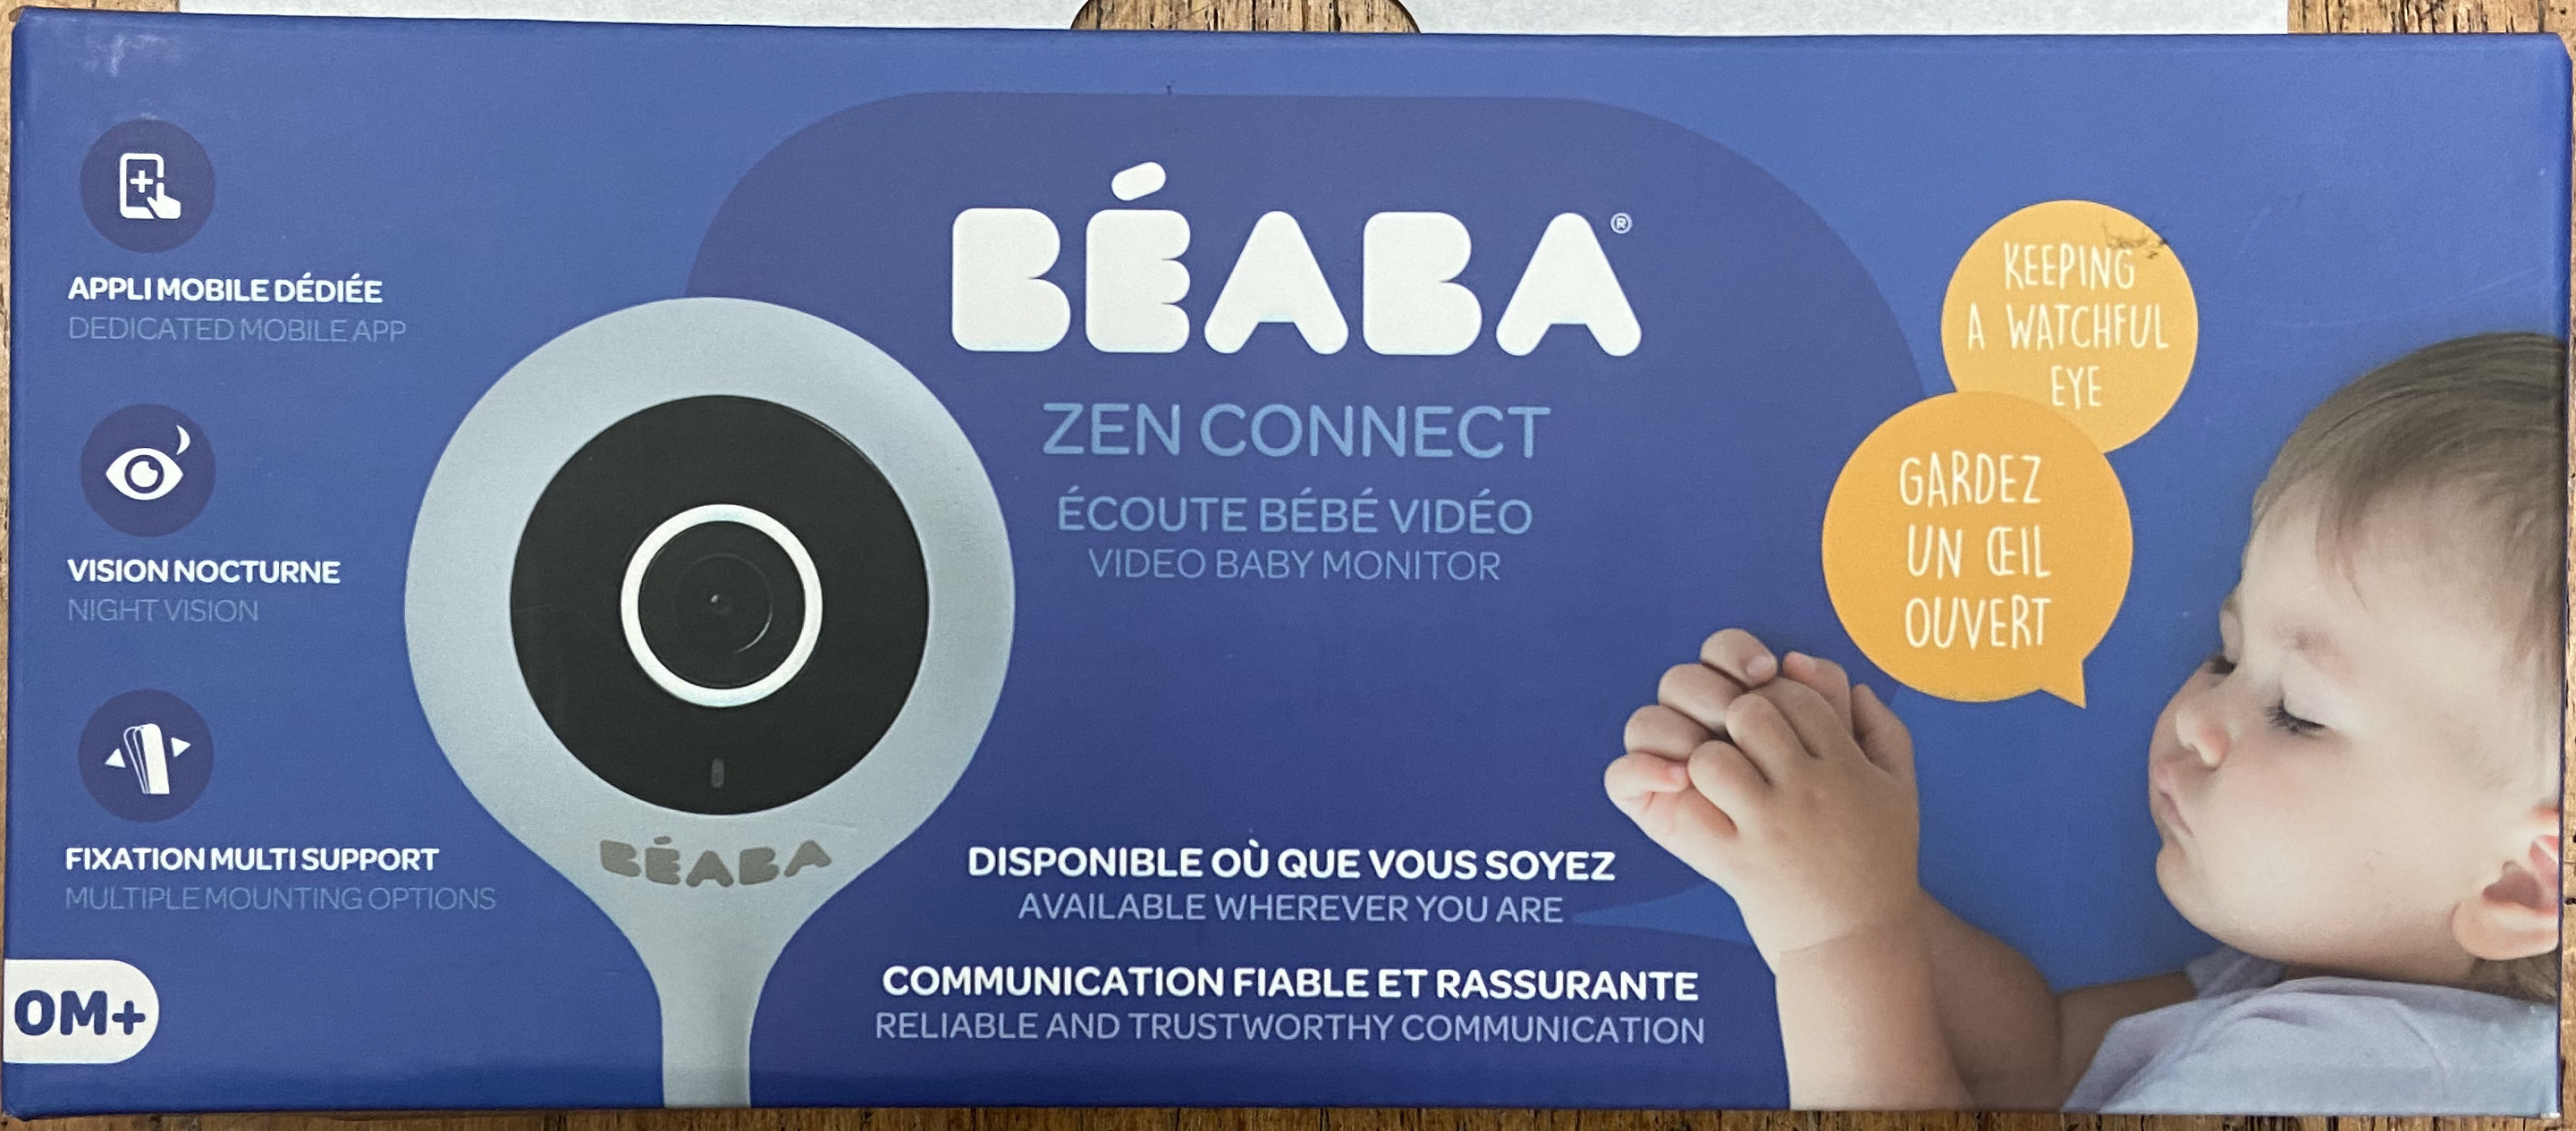 Test Du Babyphone Video Zen Connect De Beaba